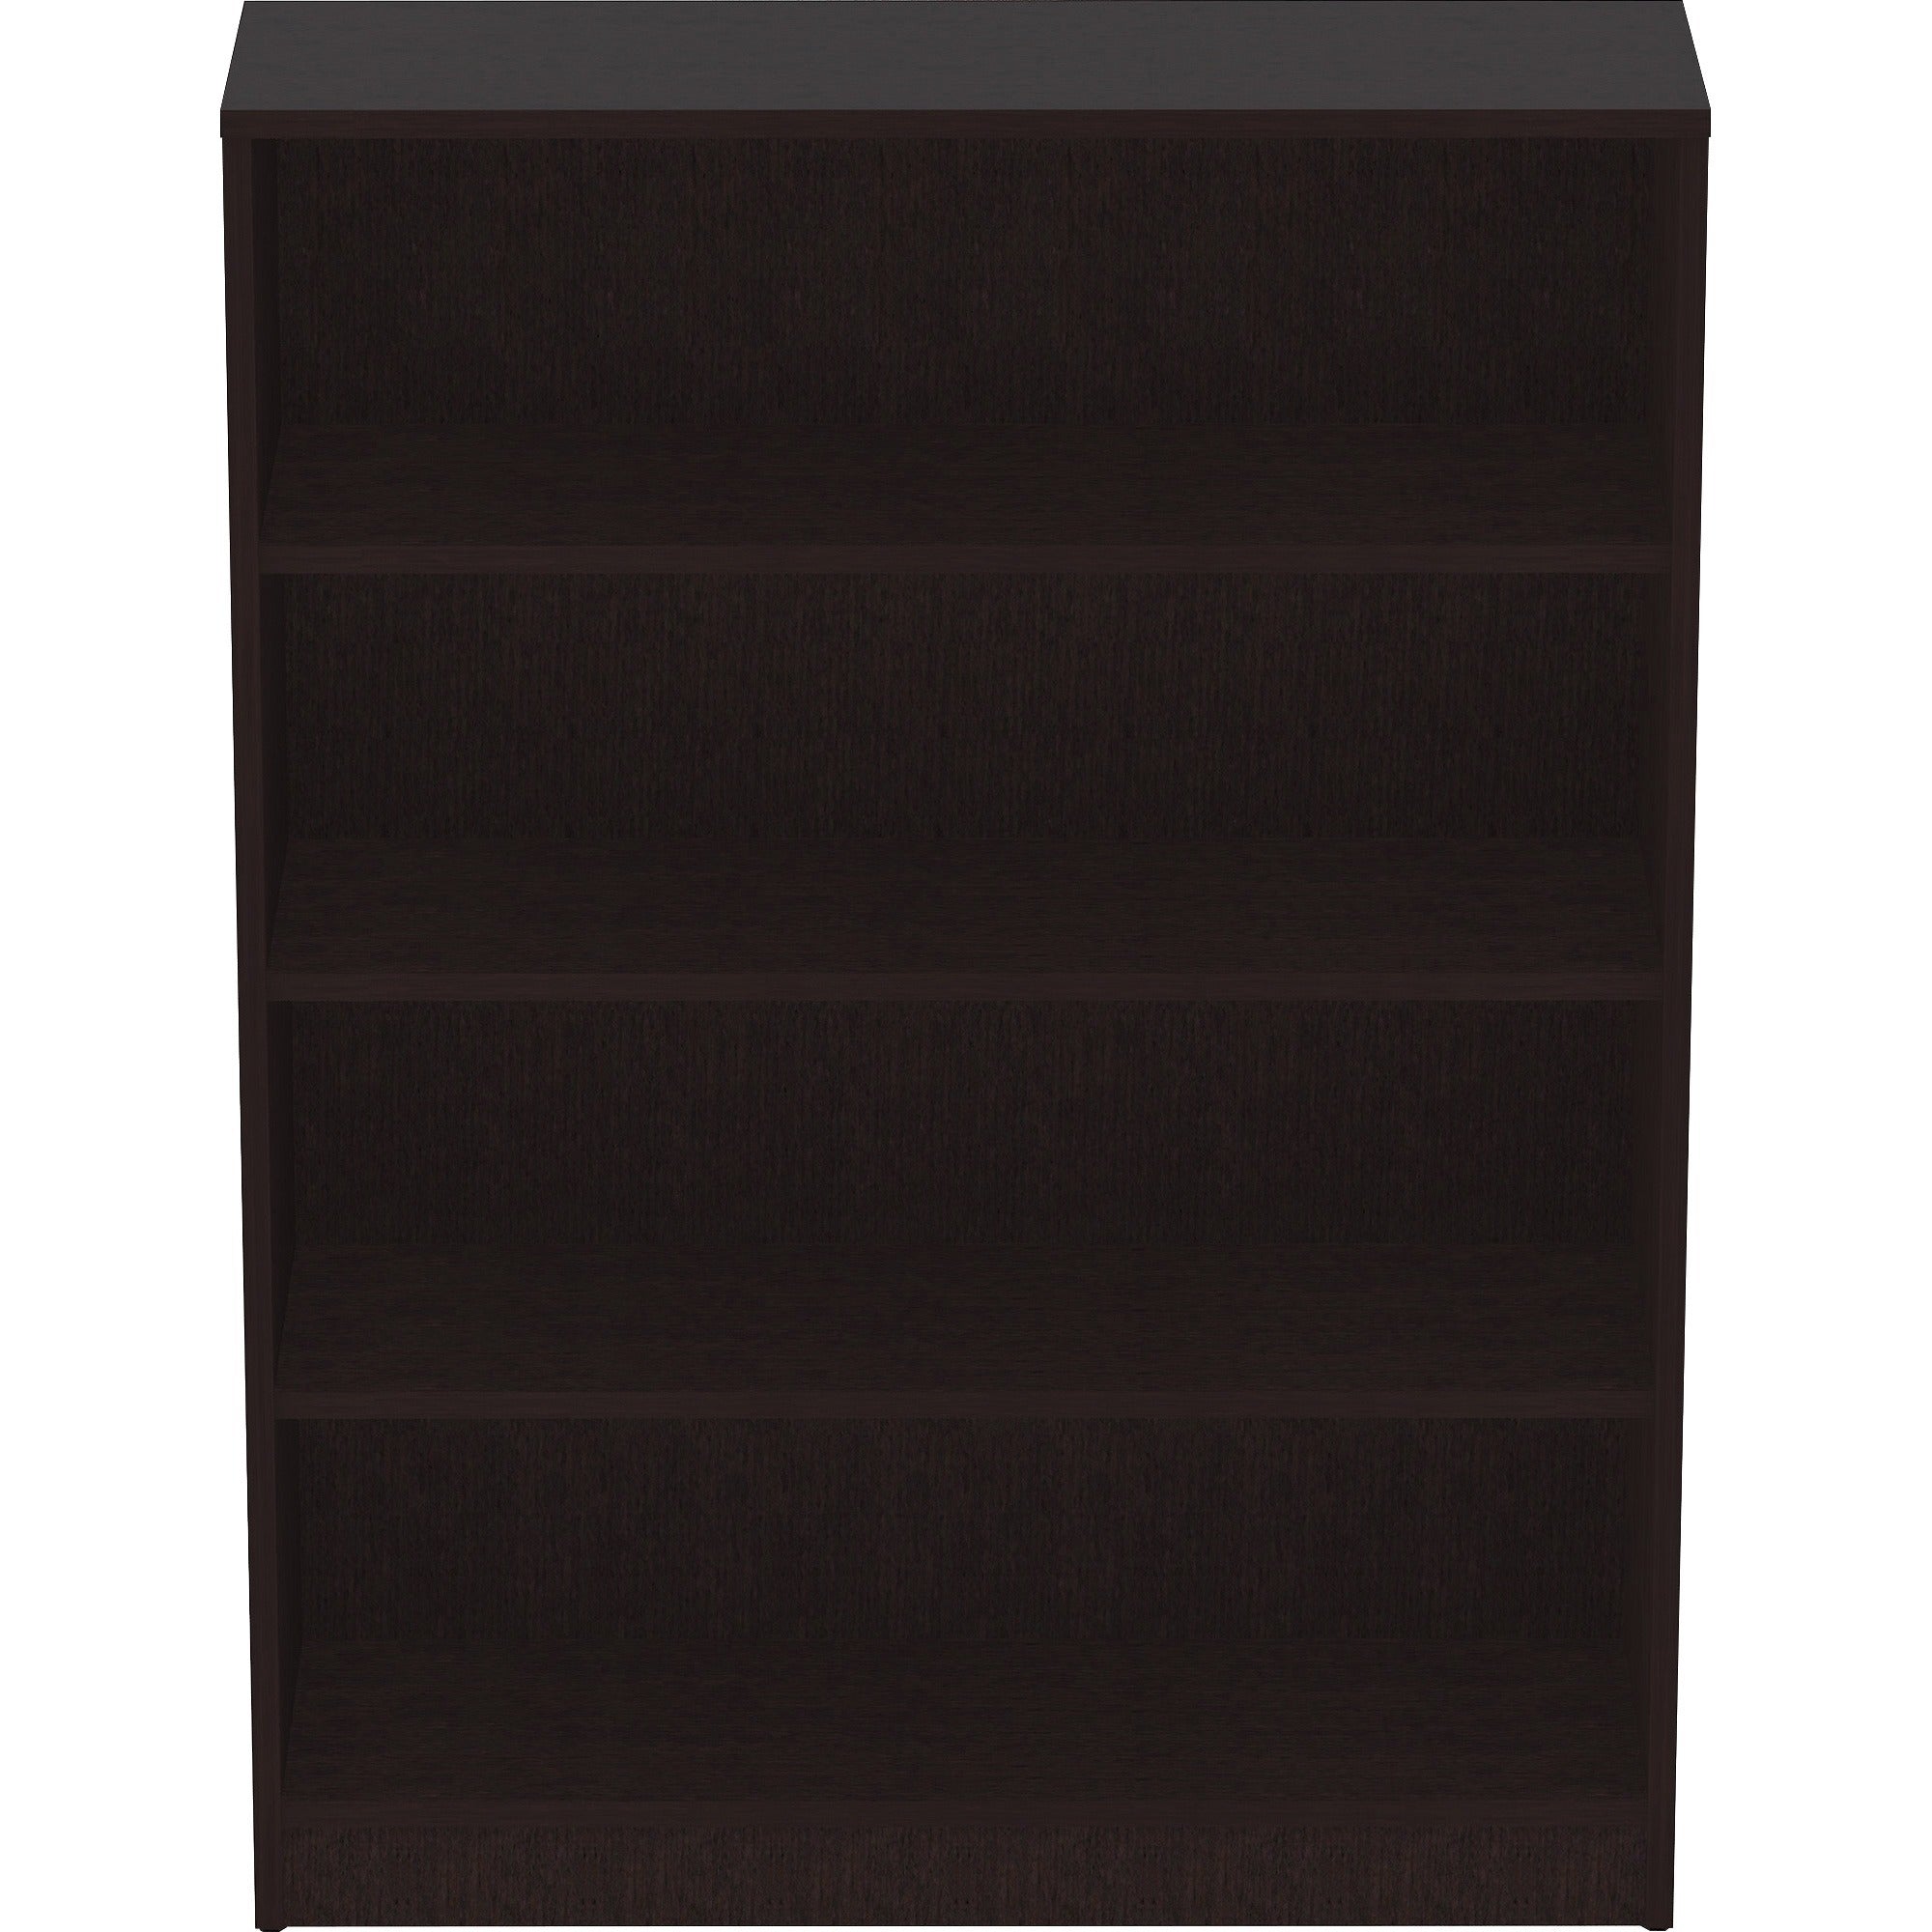 lorell-laminate-bookcase-08-shelf-36-x-1248-4-shelves-3-adjustable-shelfves-square-edge-material-thermofused-laminate-tfl-finish-espresso_llr18227 - 2